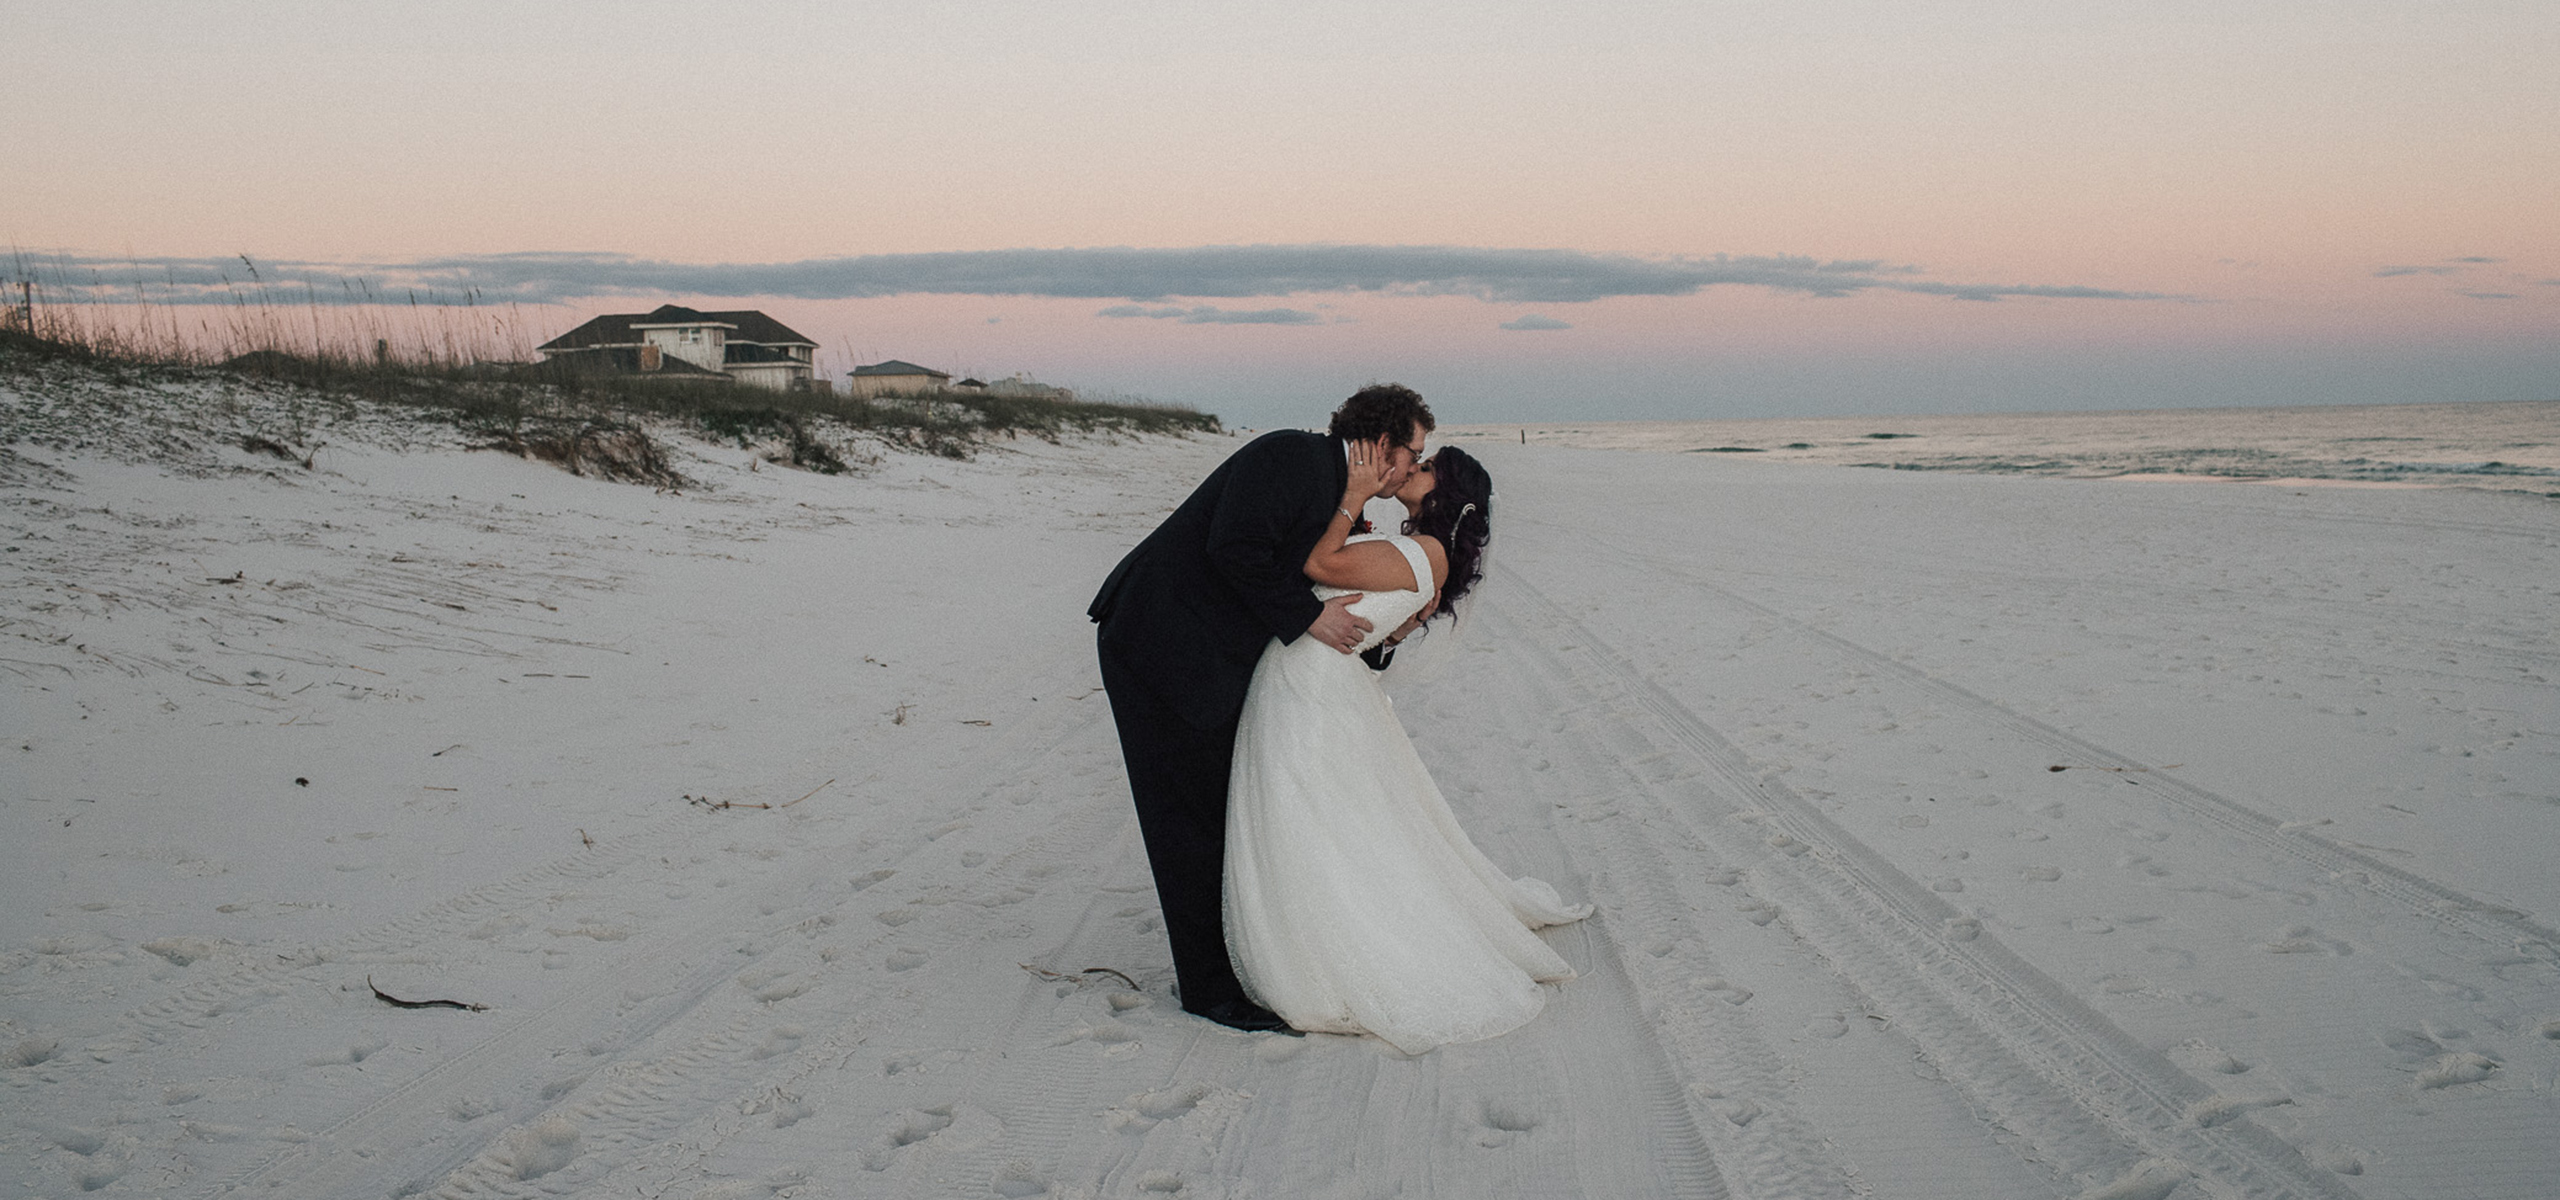 Rosemary Beach Florida Wedding Photography + Elopement Photography